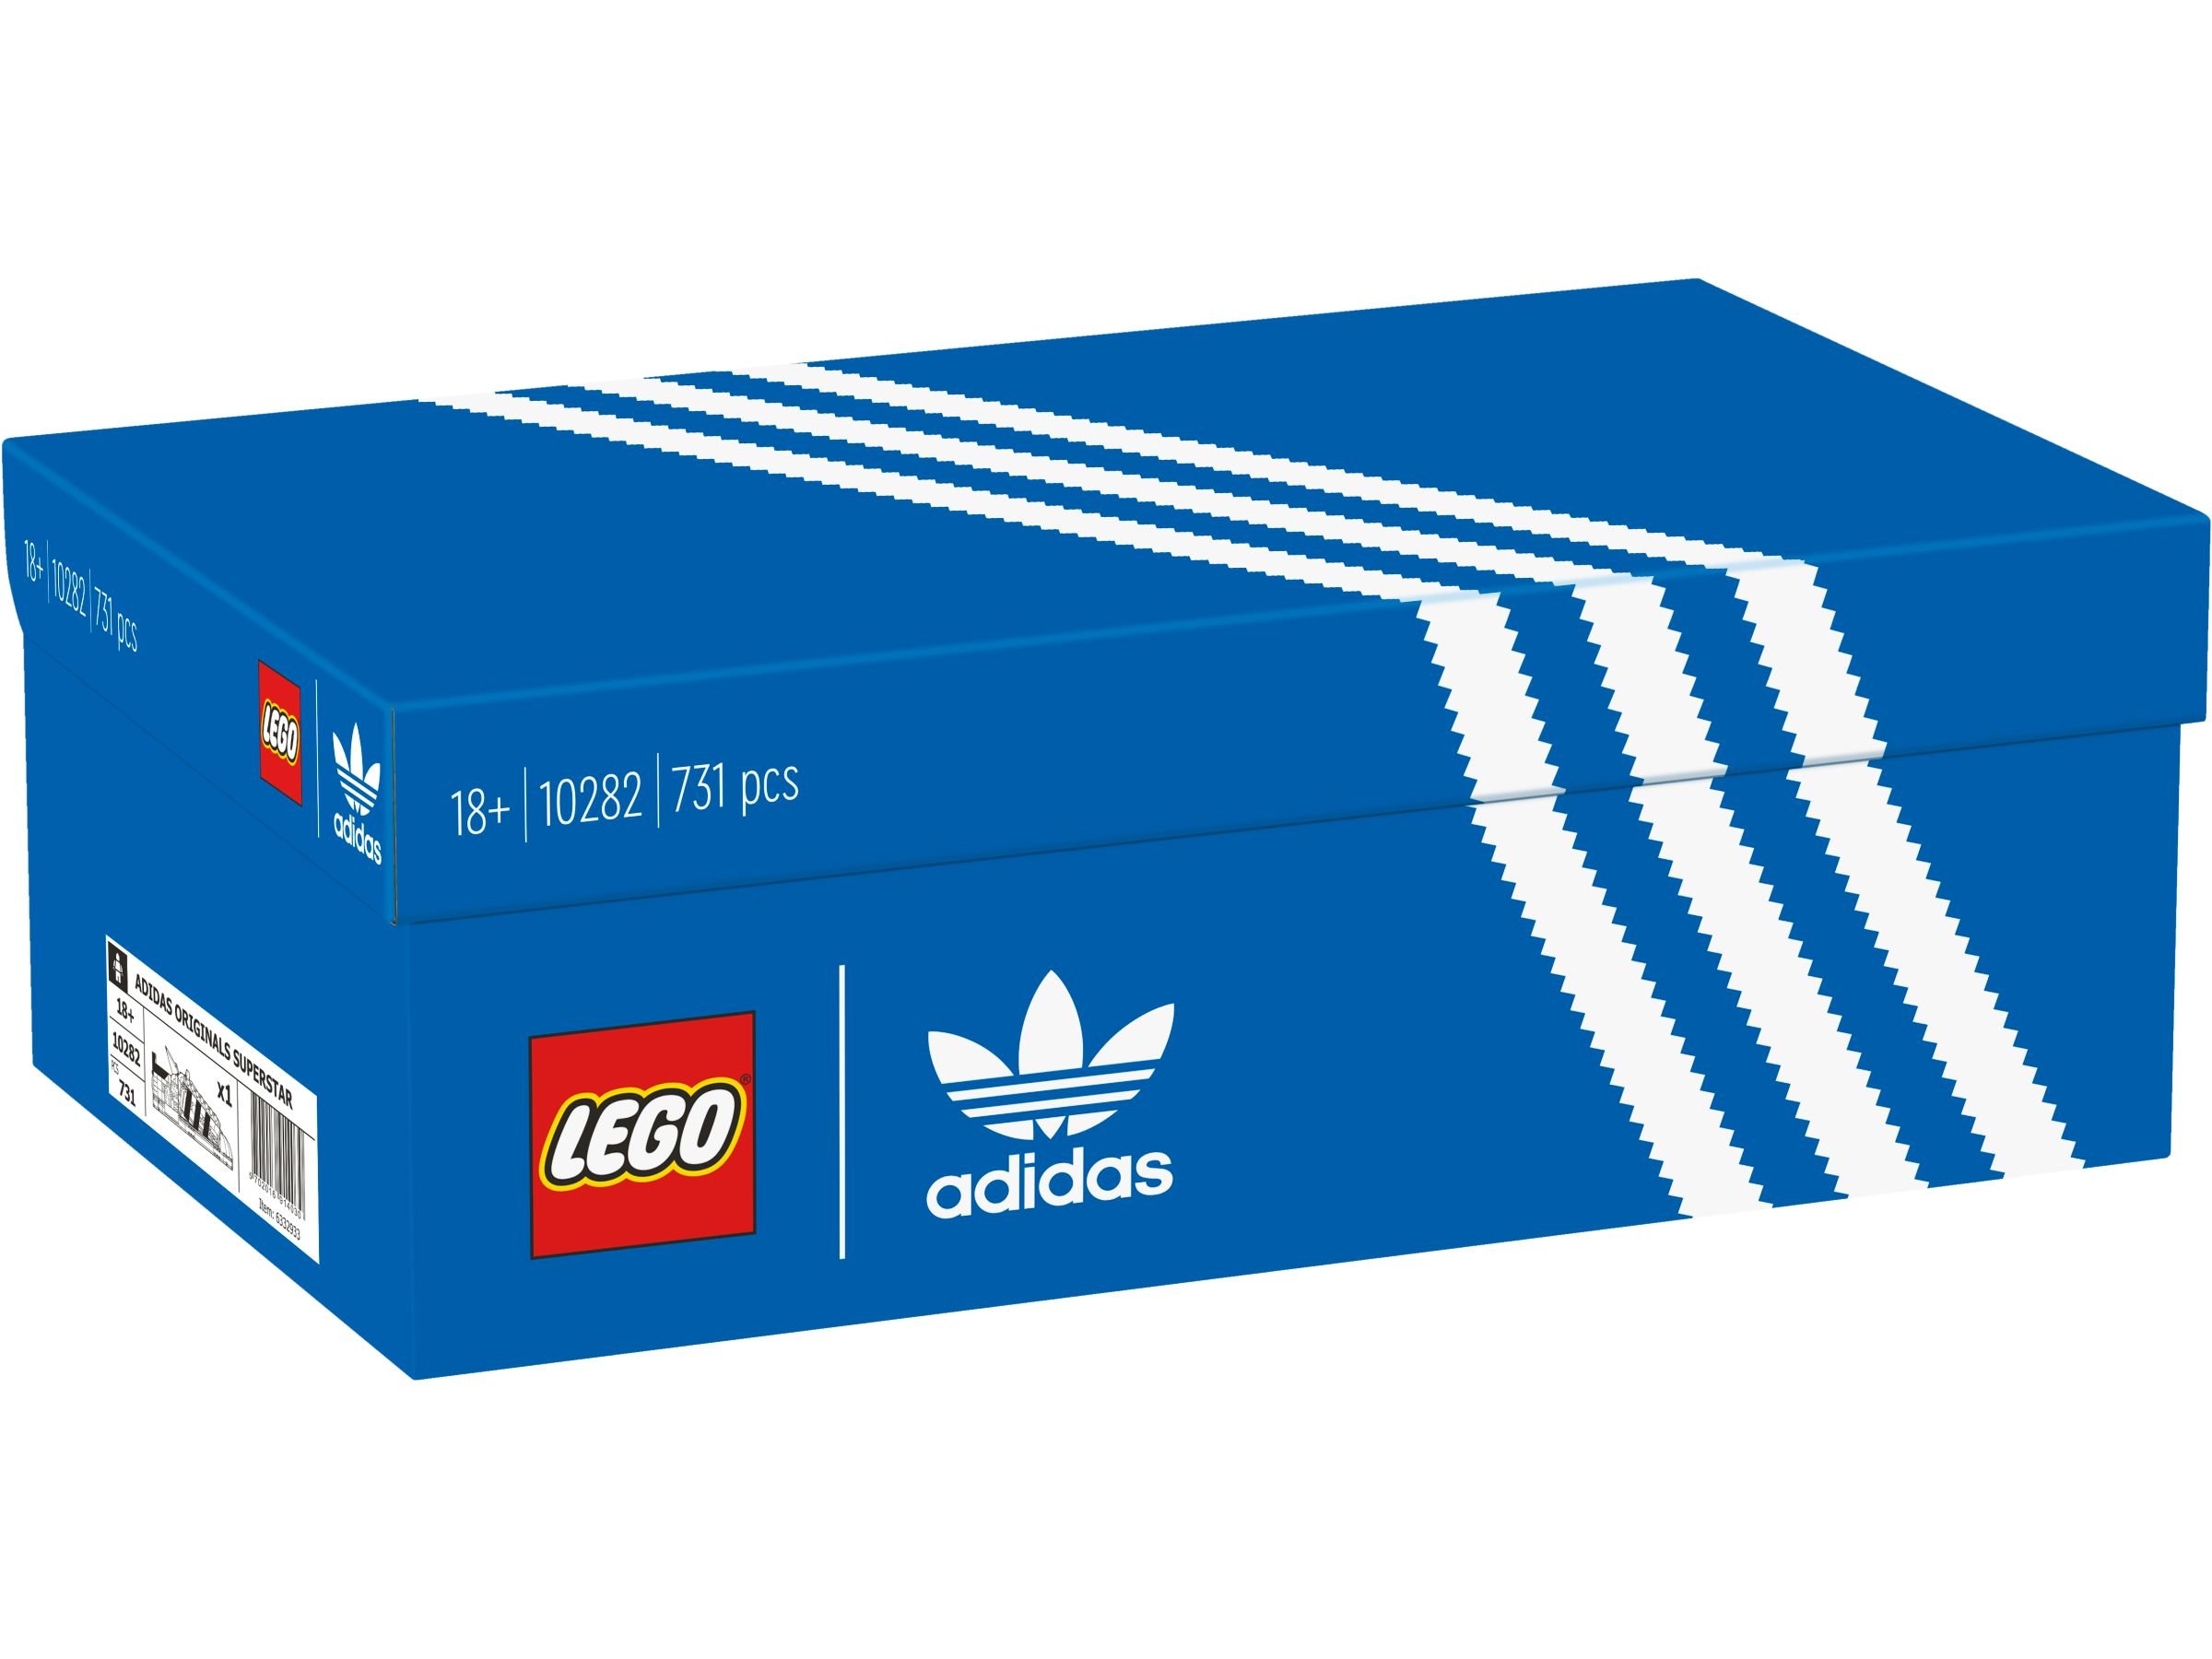 LEGO Advanced Models 10282 adidas Originals Superstar LEGO_10282_box1_v29.jpg